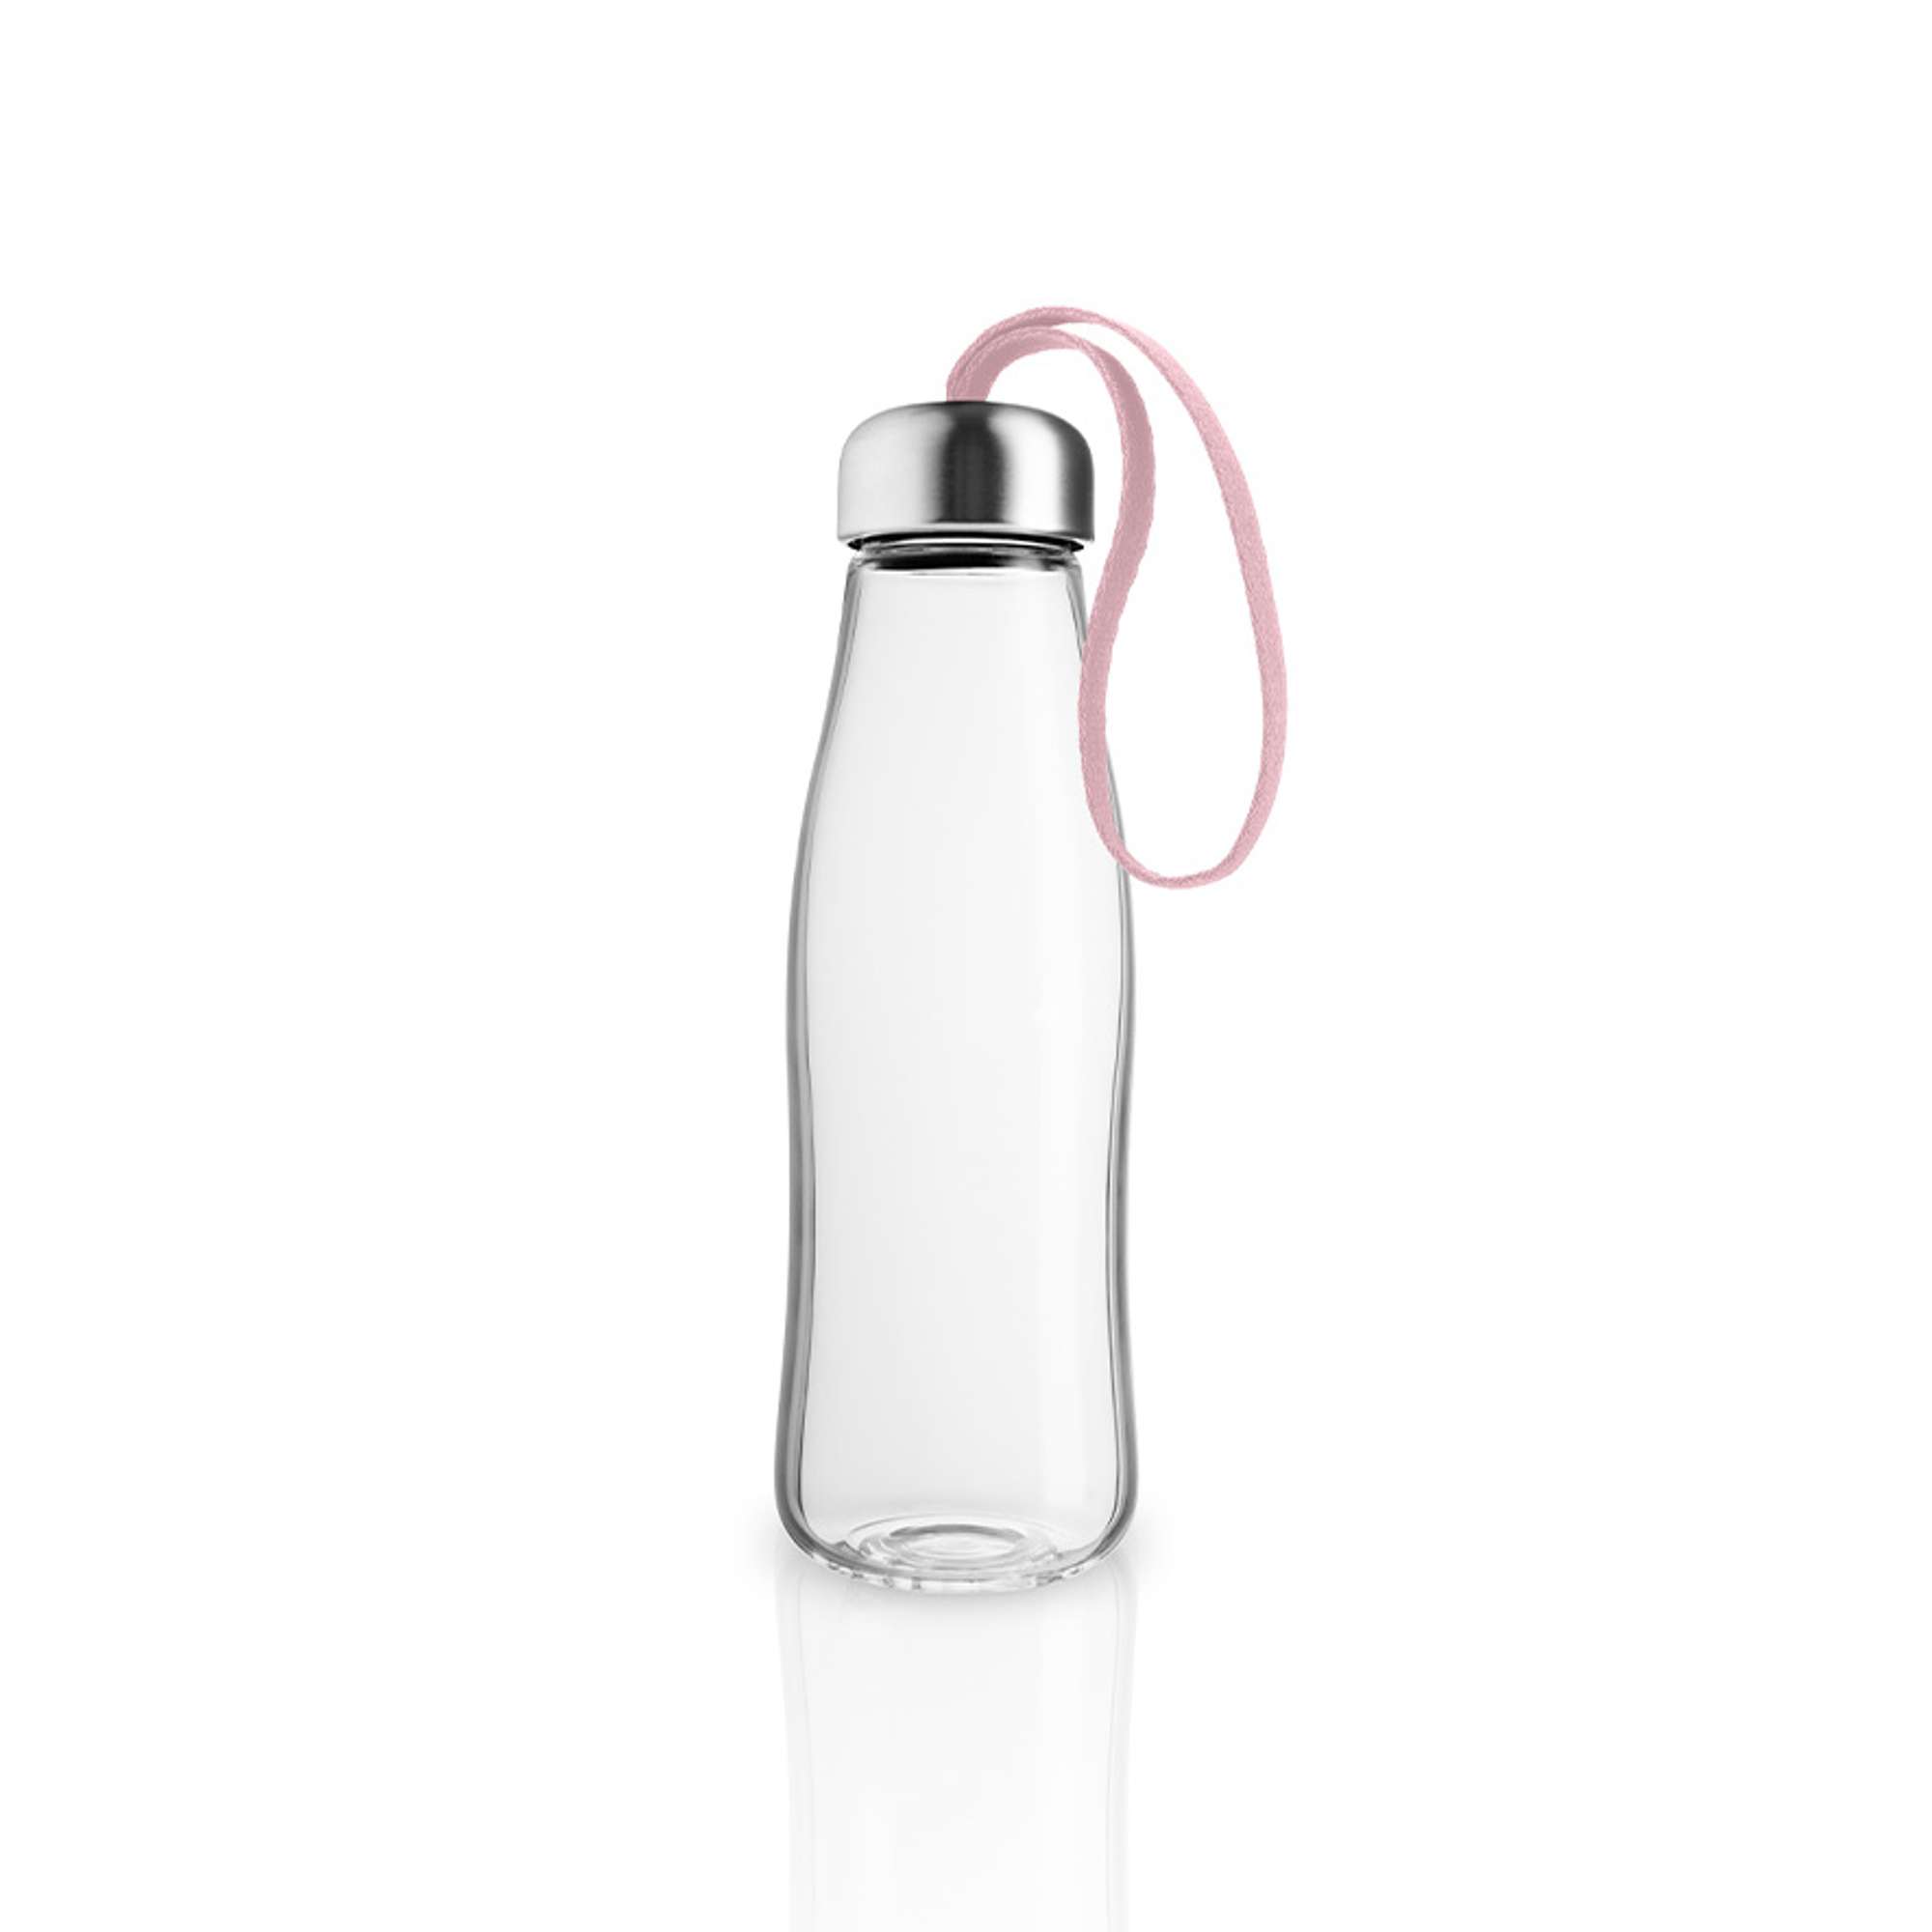 Glassdrikkeflaske - 0,5 liter - Rose quartz